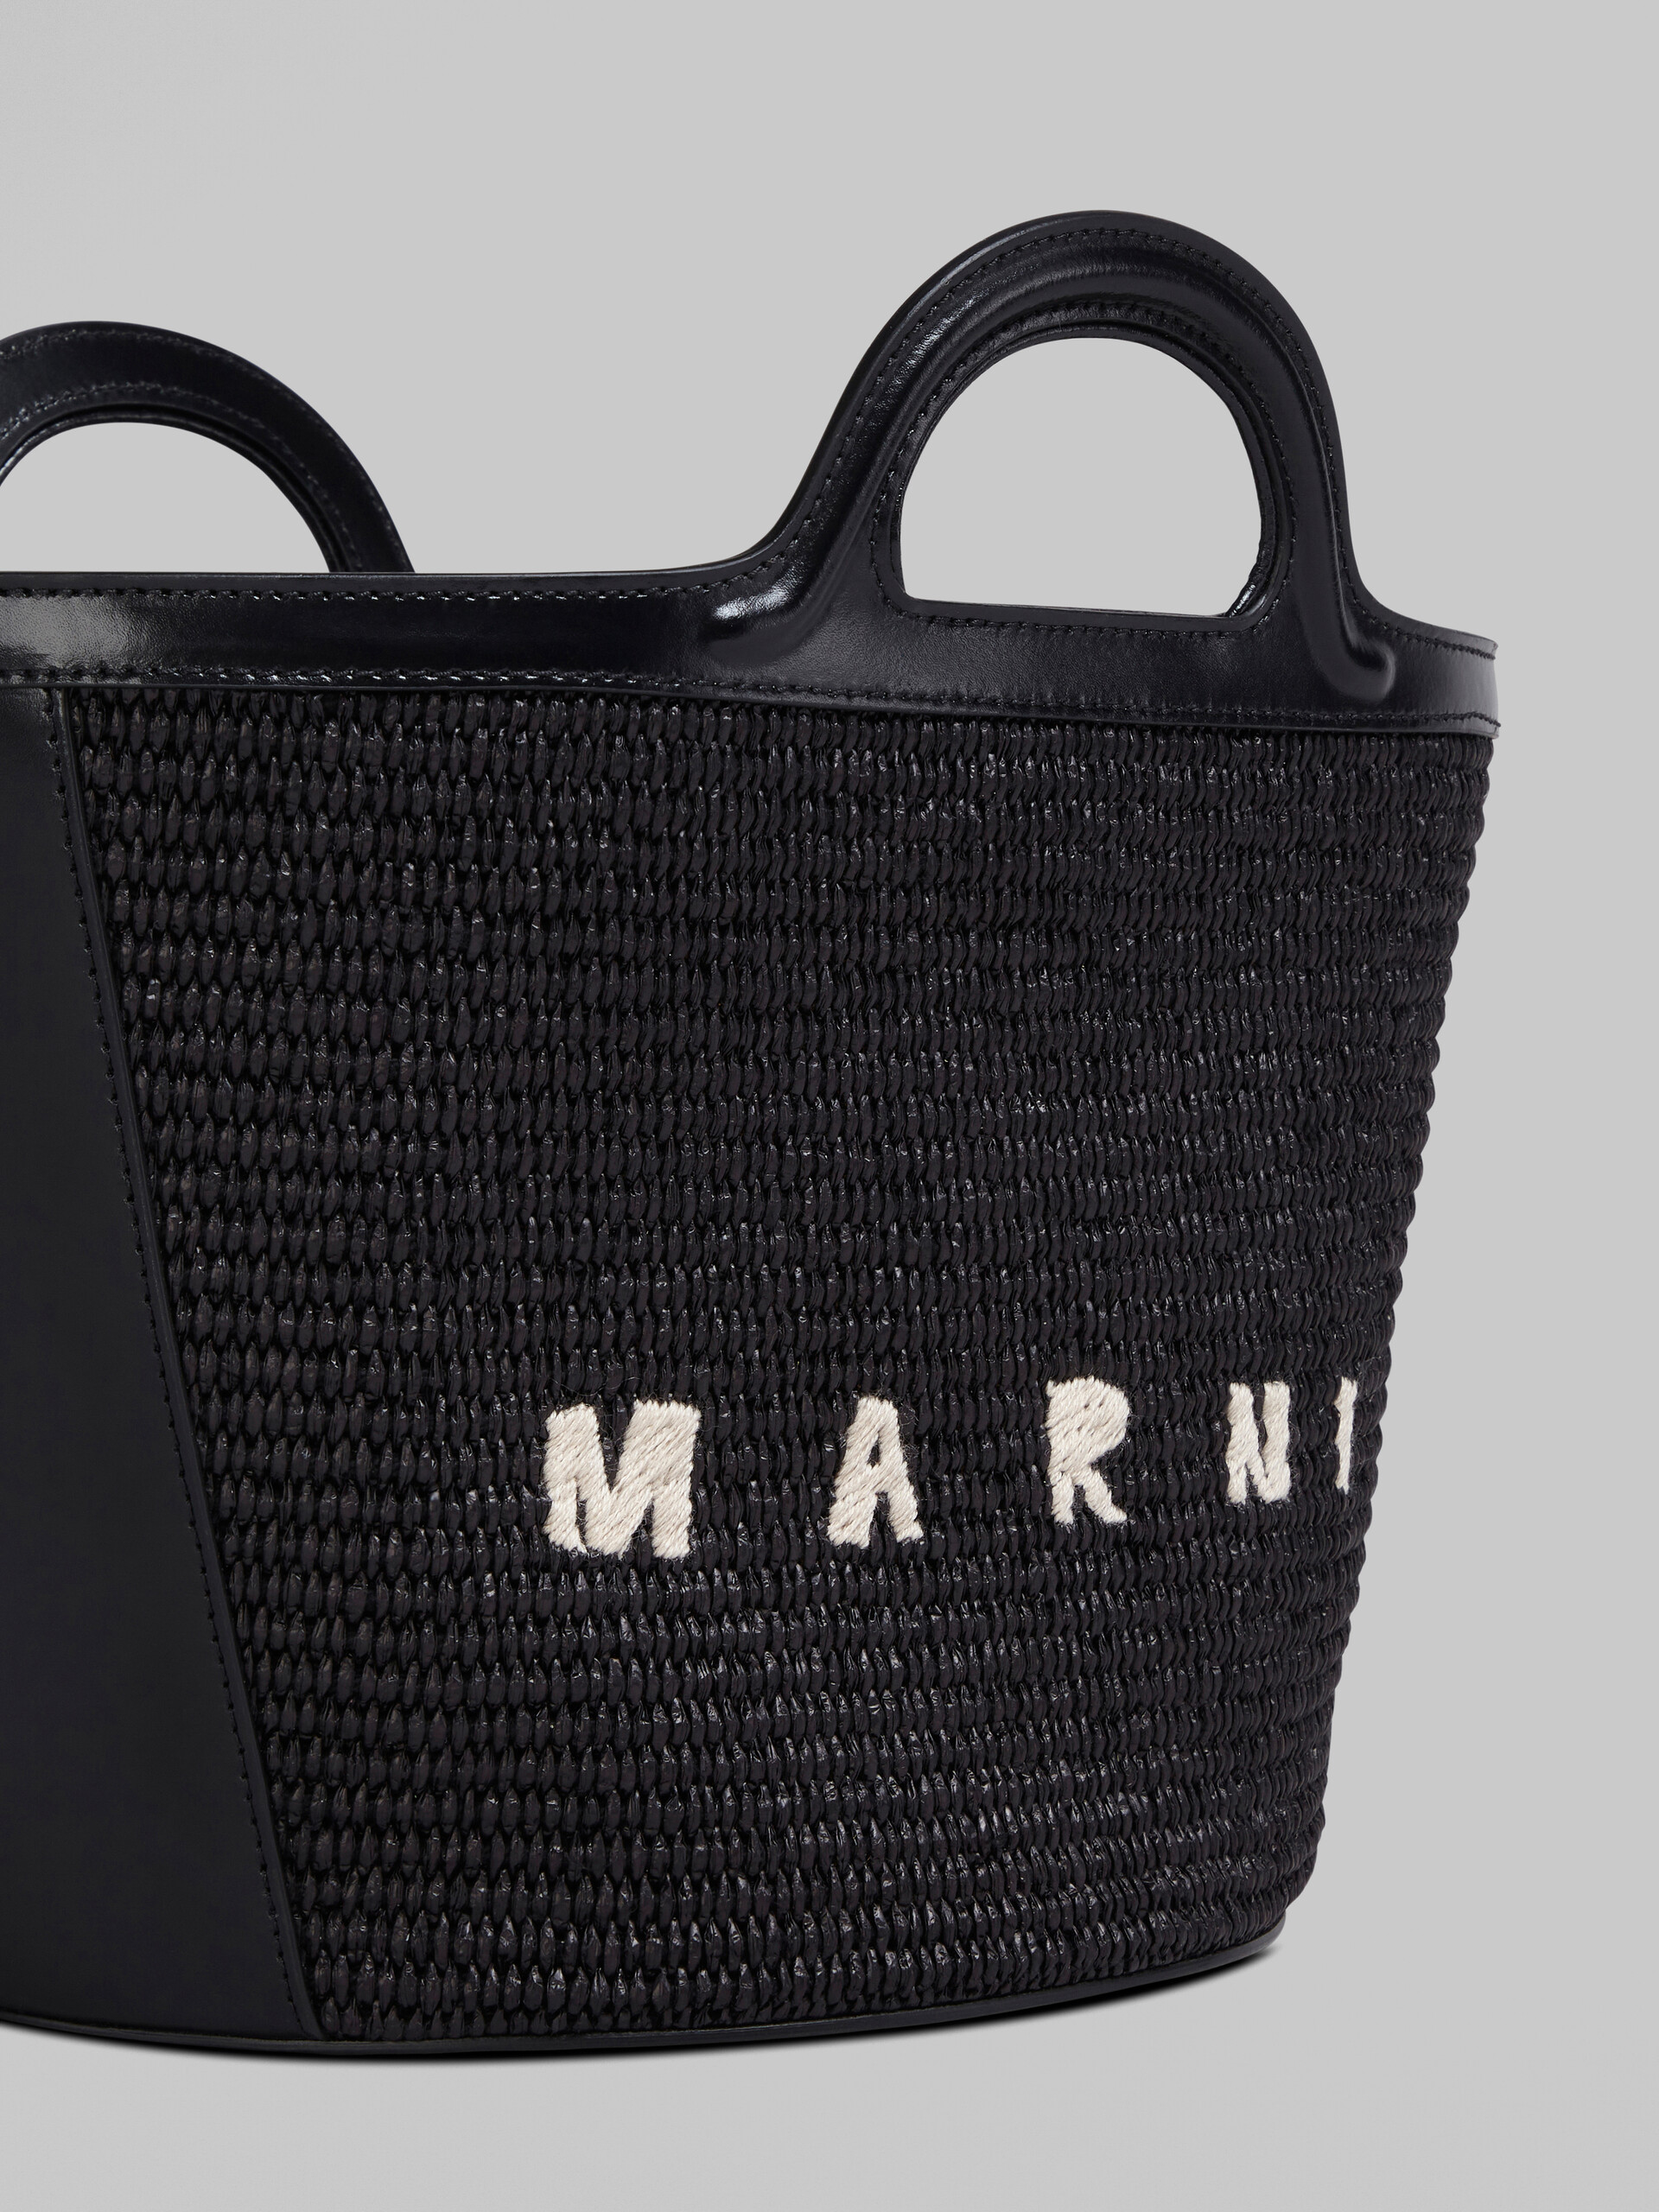 Tropicalia Small Bag in black leather and raffia - Handbags - Image 5